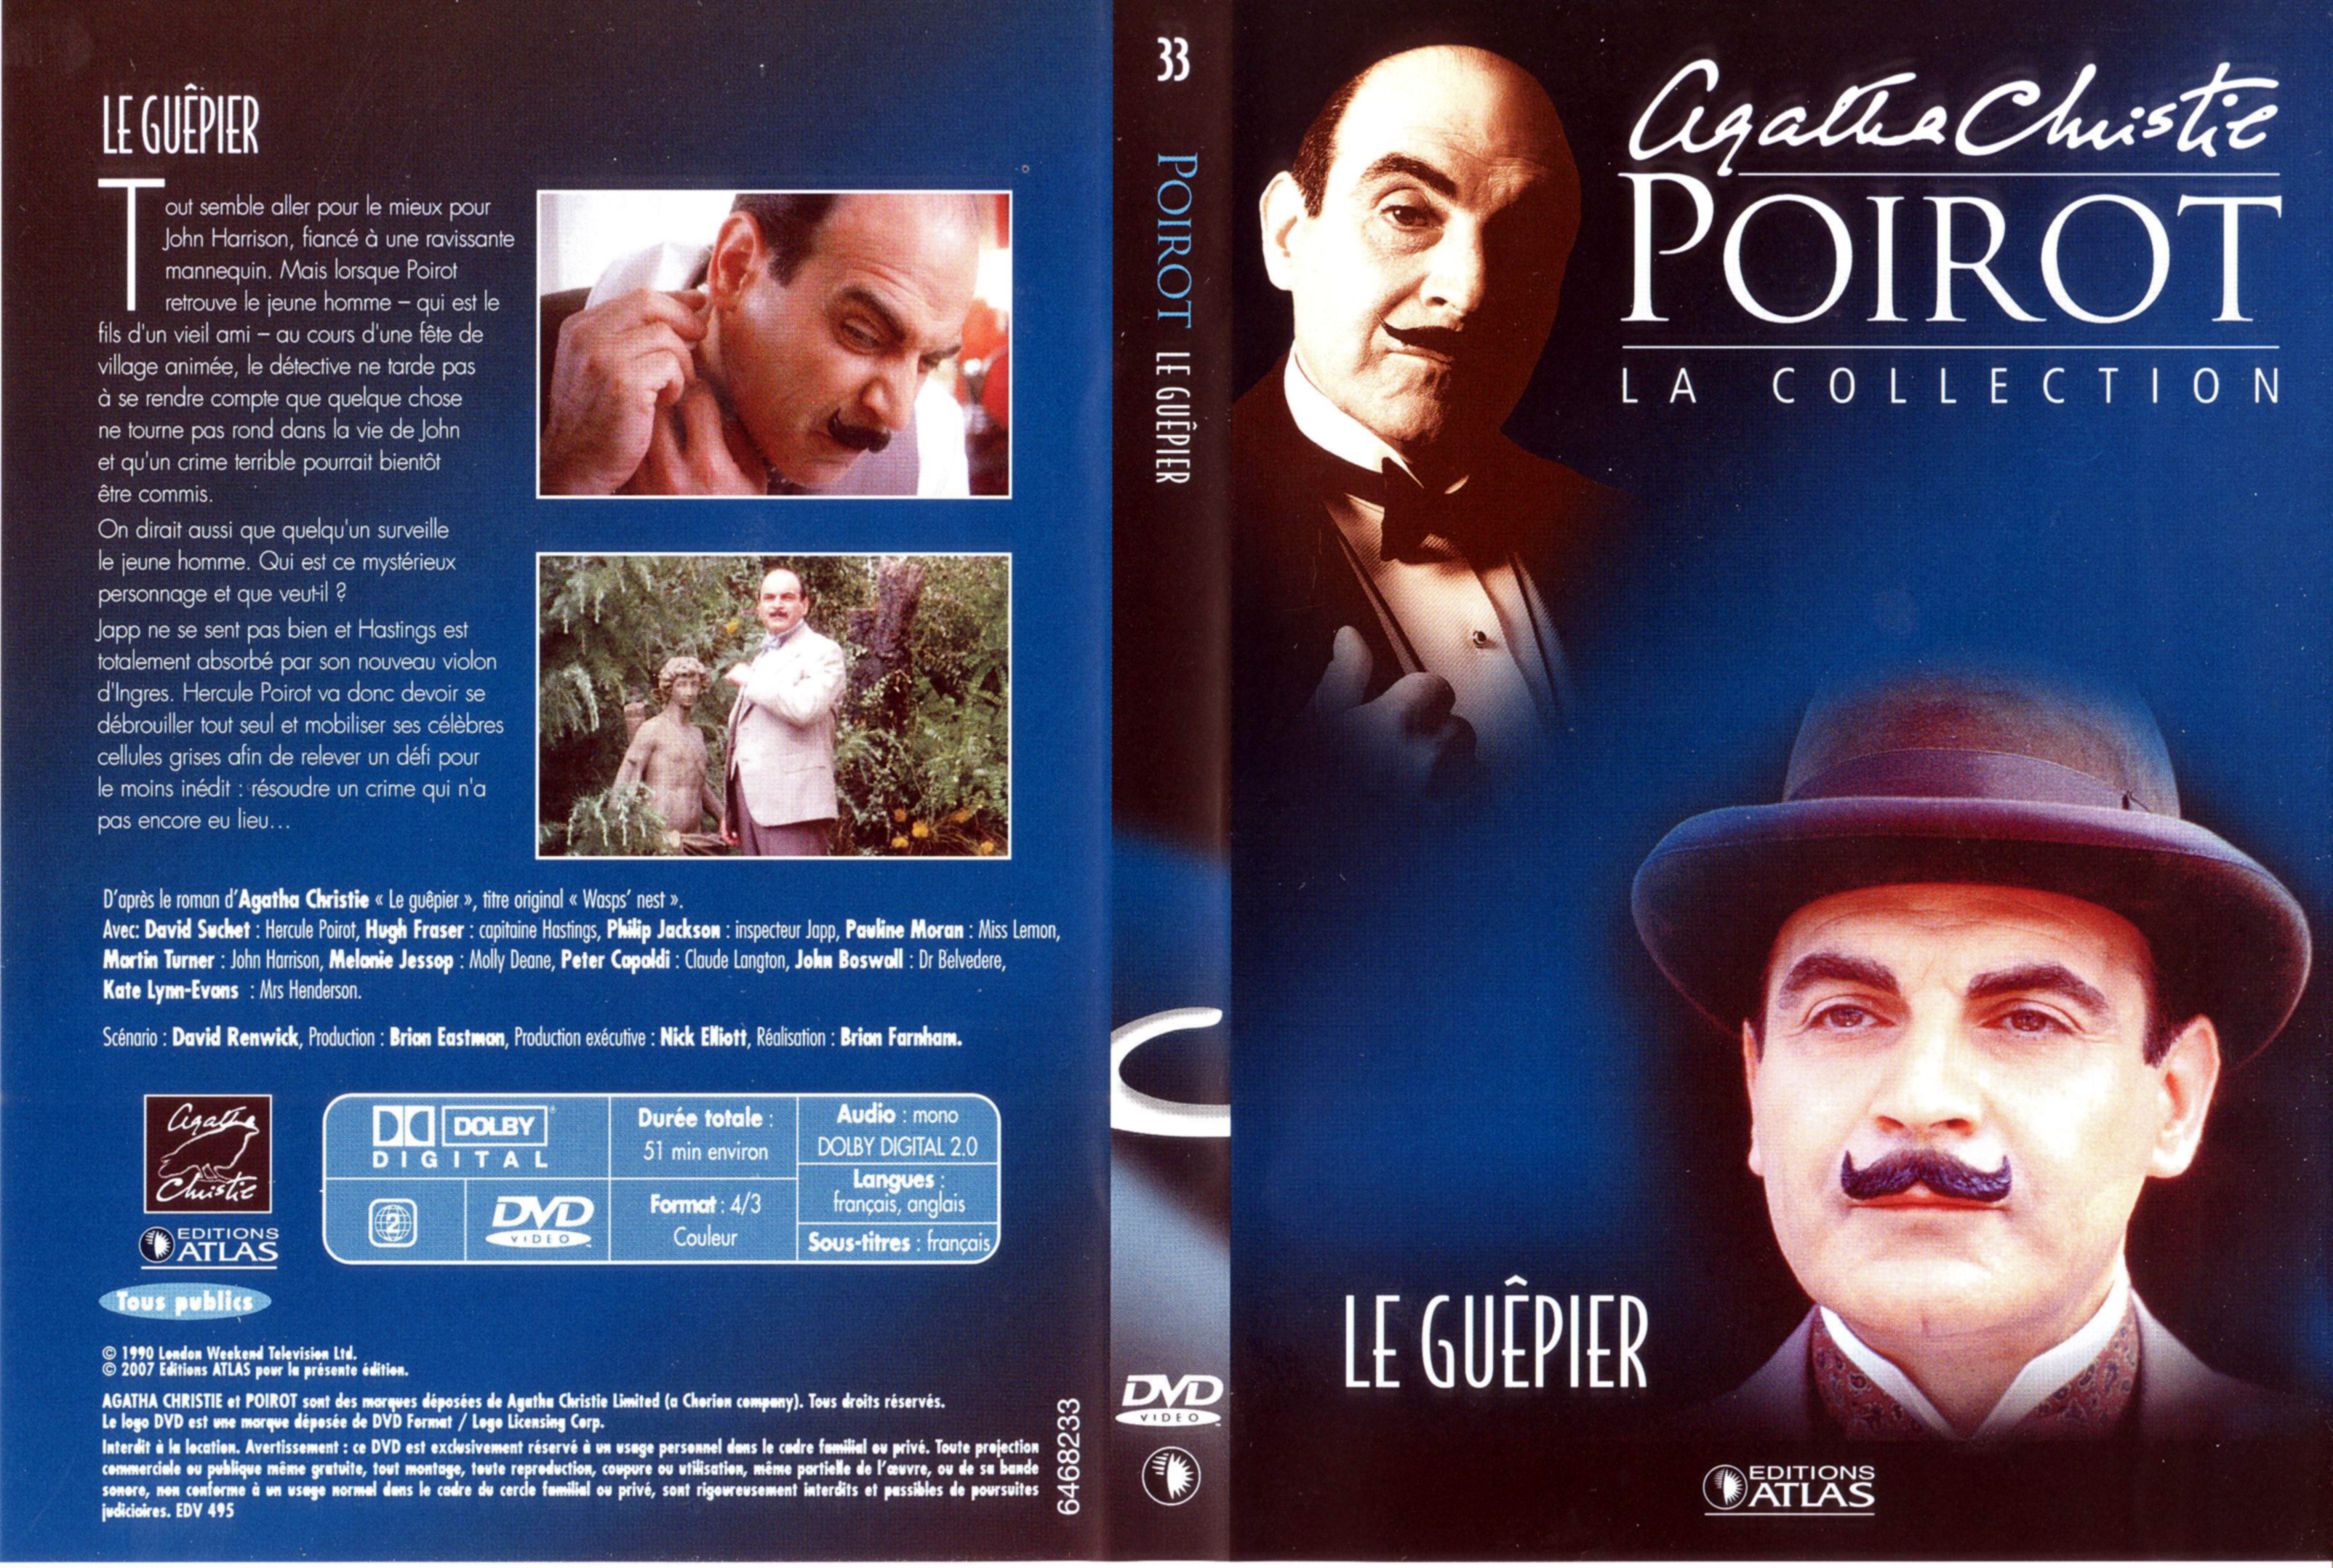 Jaquette DVD Hercule Poirot vol 33